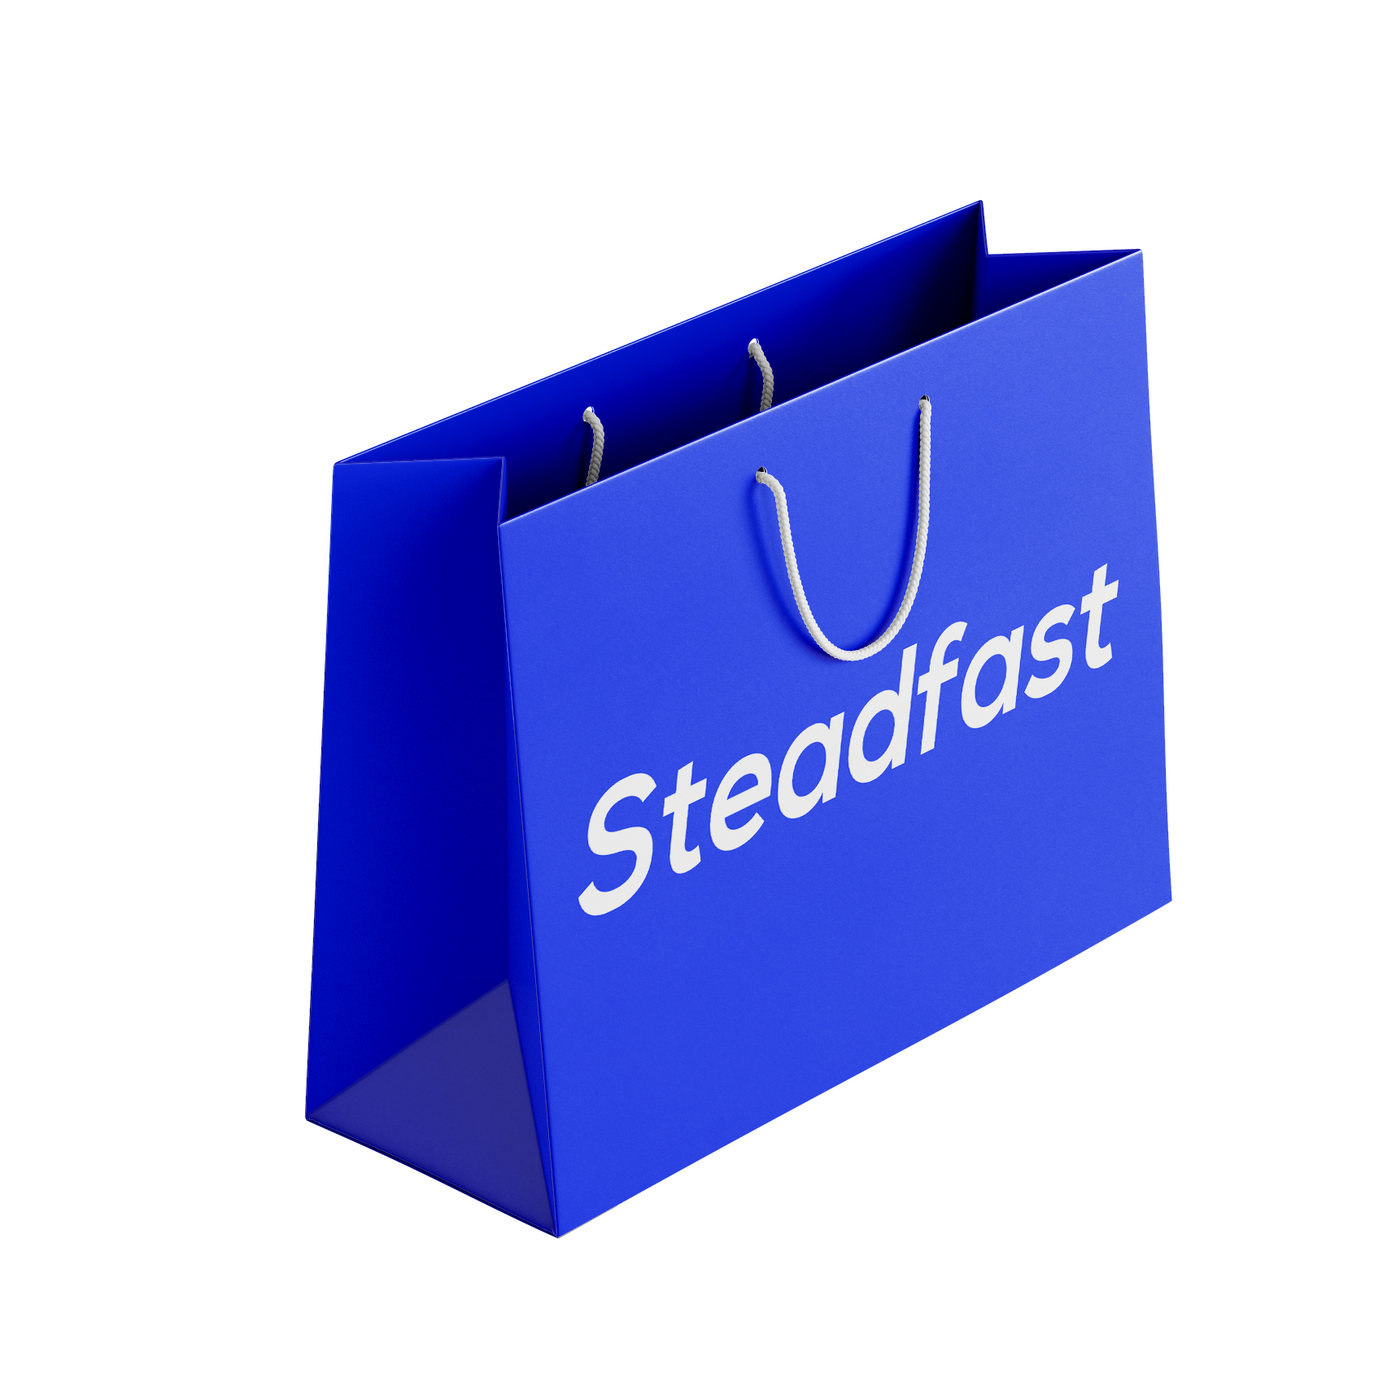 Steadfast Blue Carry Bag